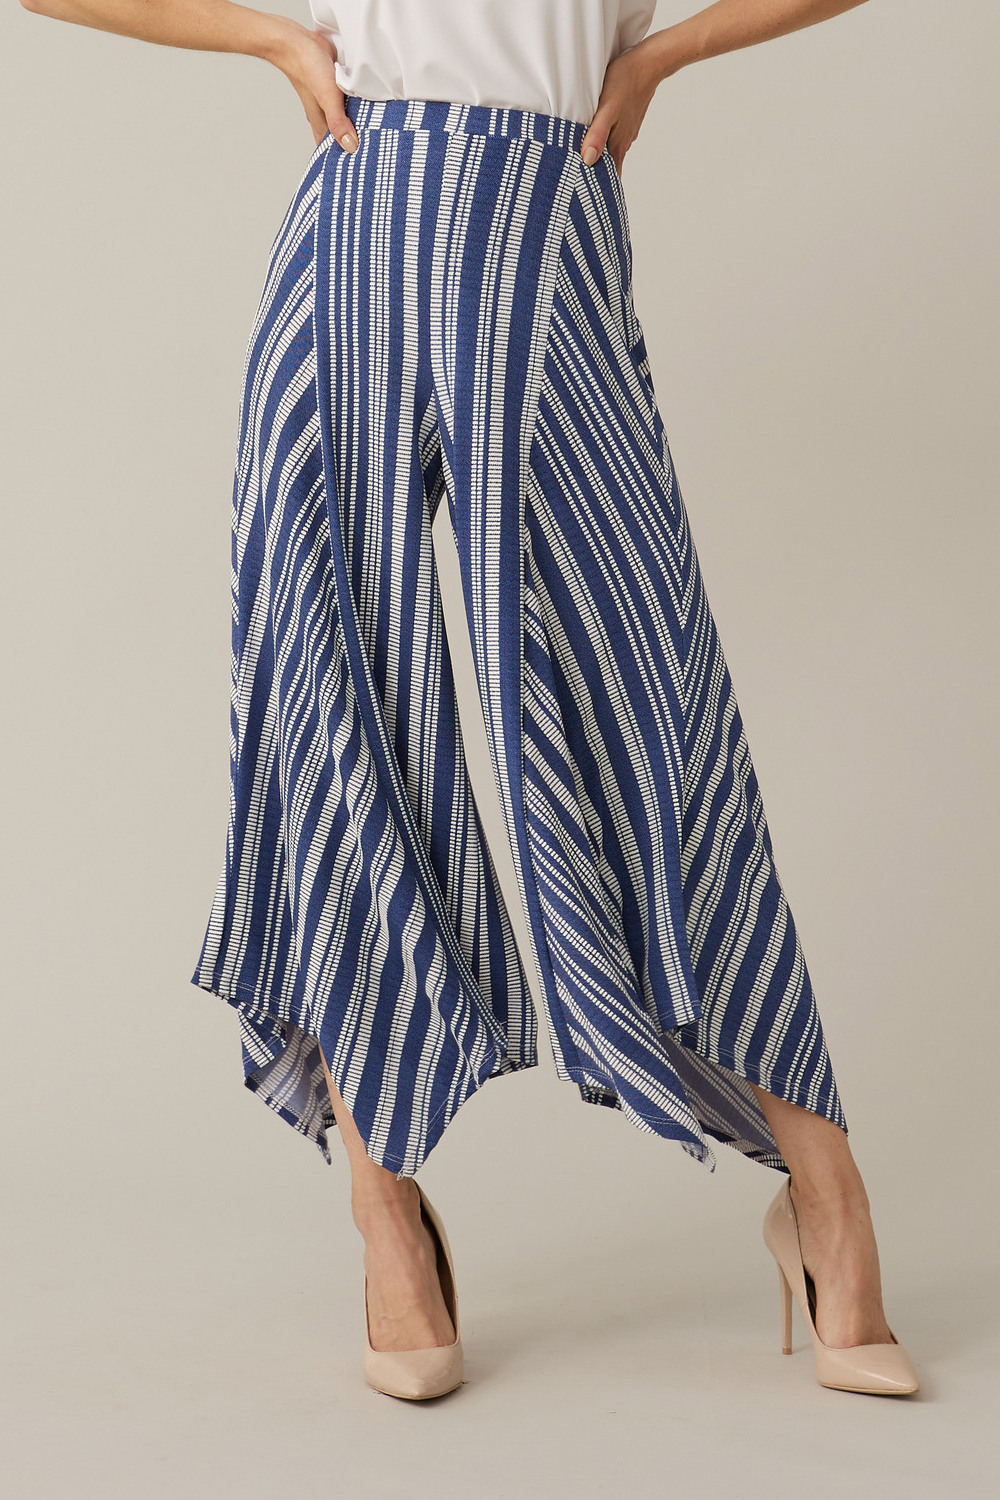 Joseph Ribkoff Pantalon-jupe asymétrique modèle 221042. Blue/vanilla